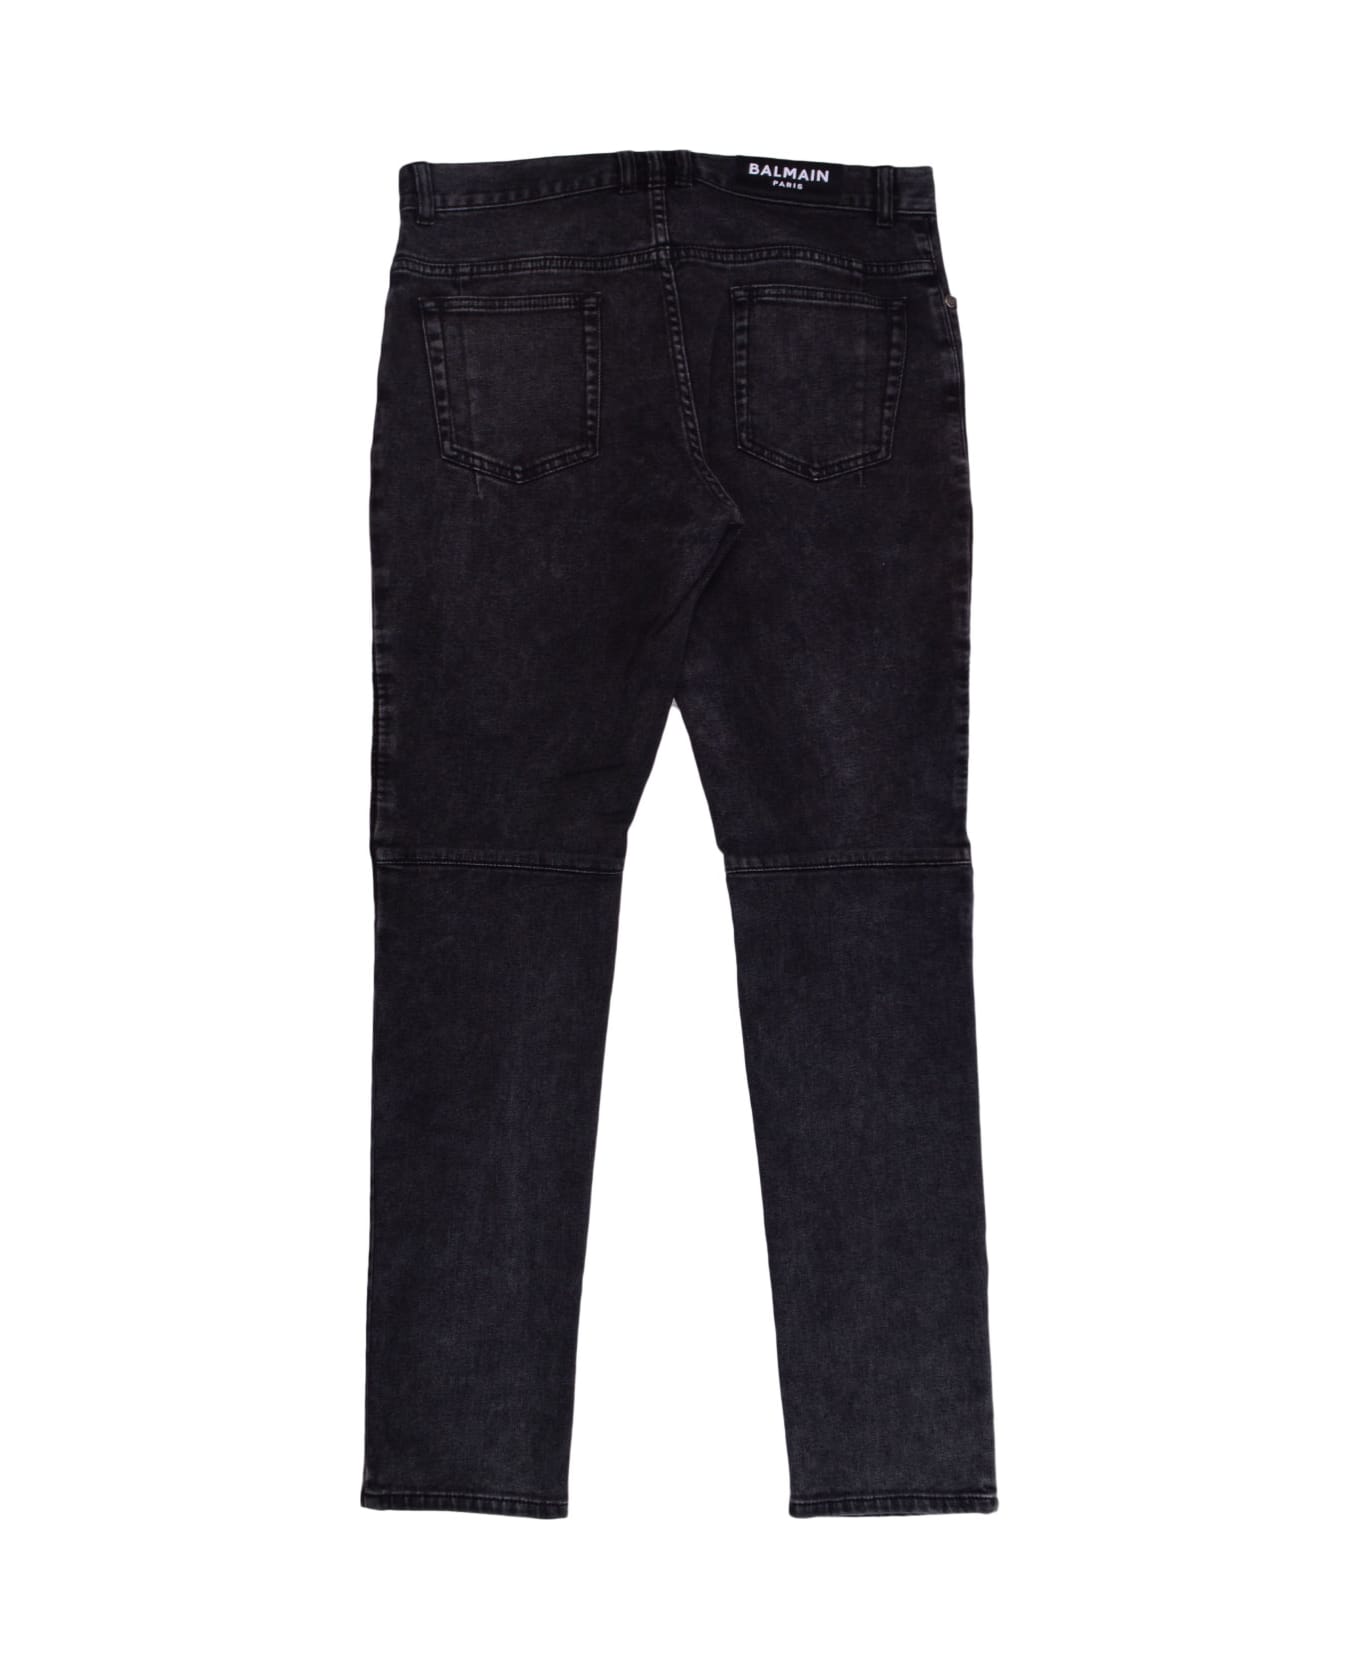 Balmain Jeans - Black